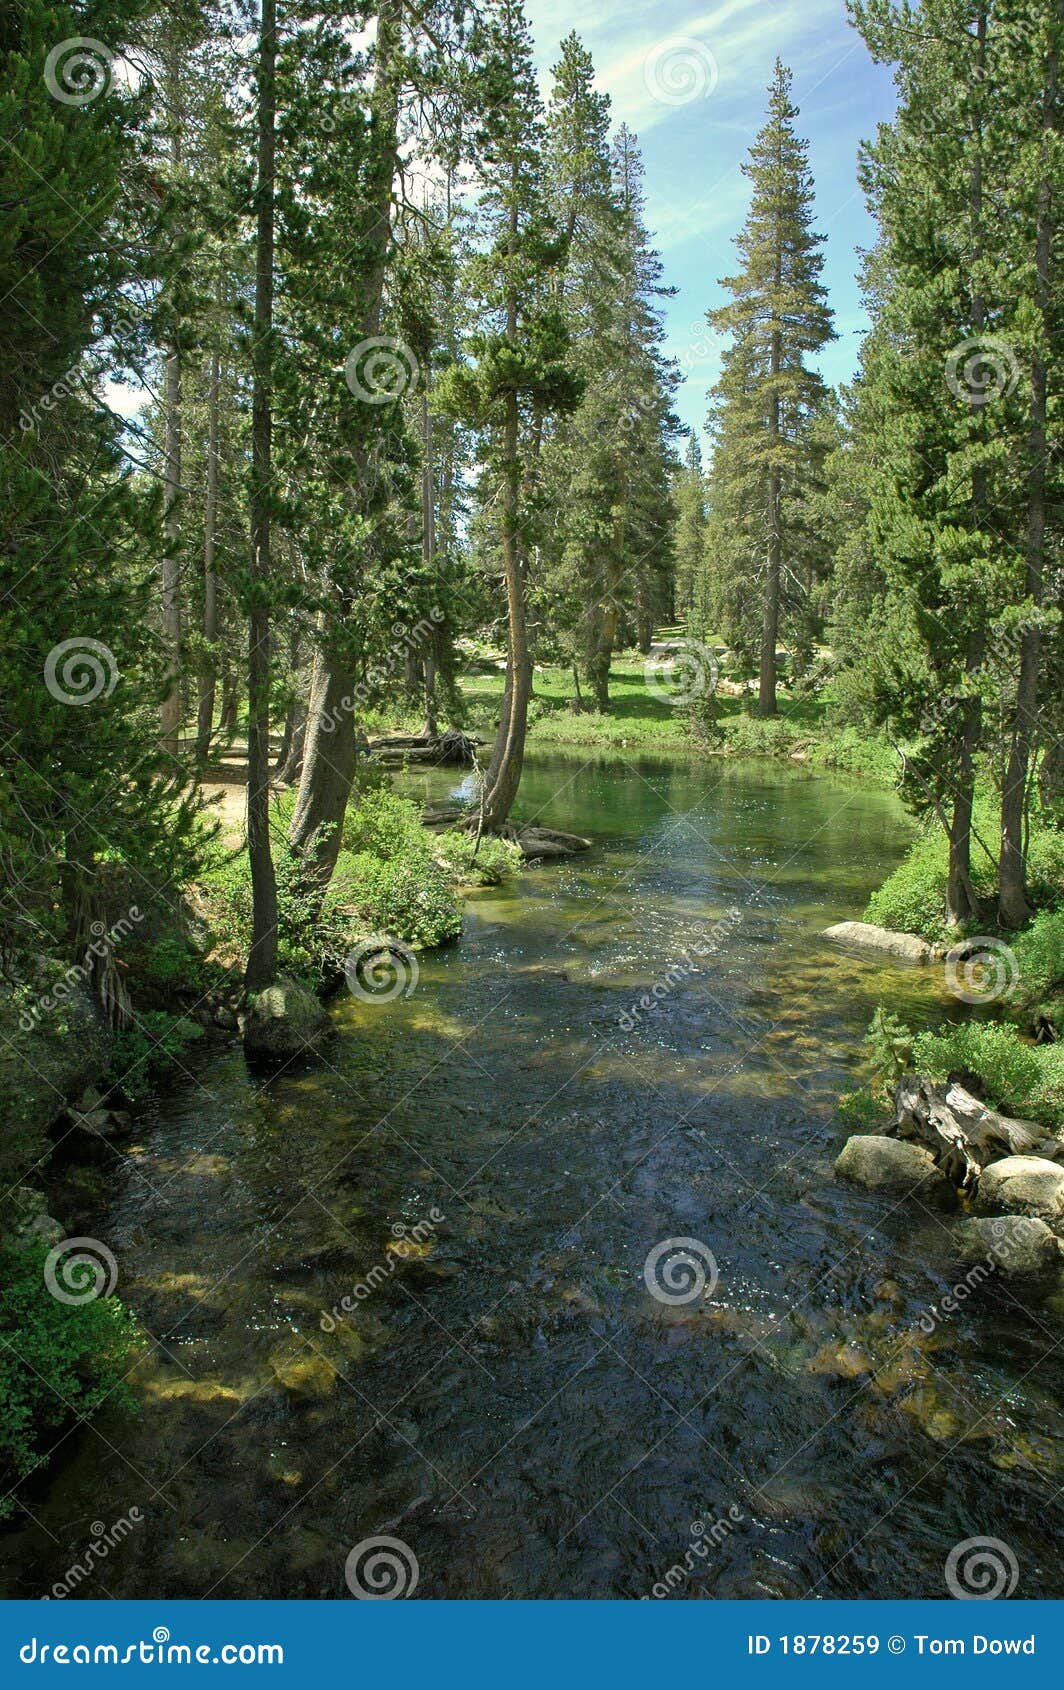 tranquil stream